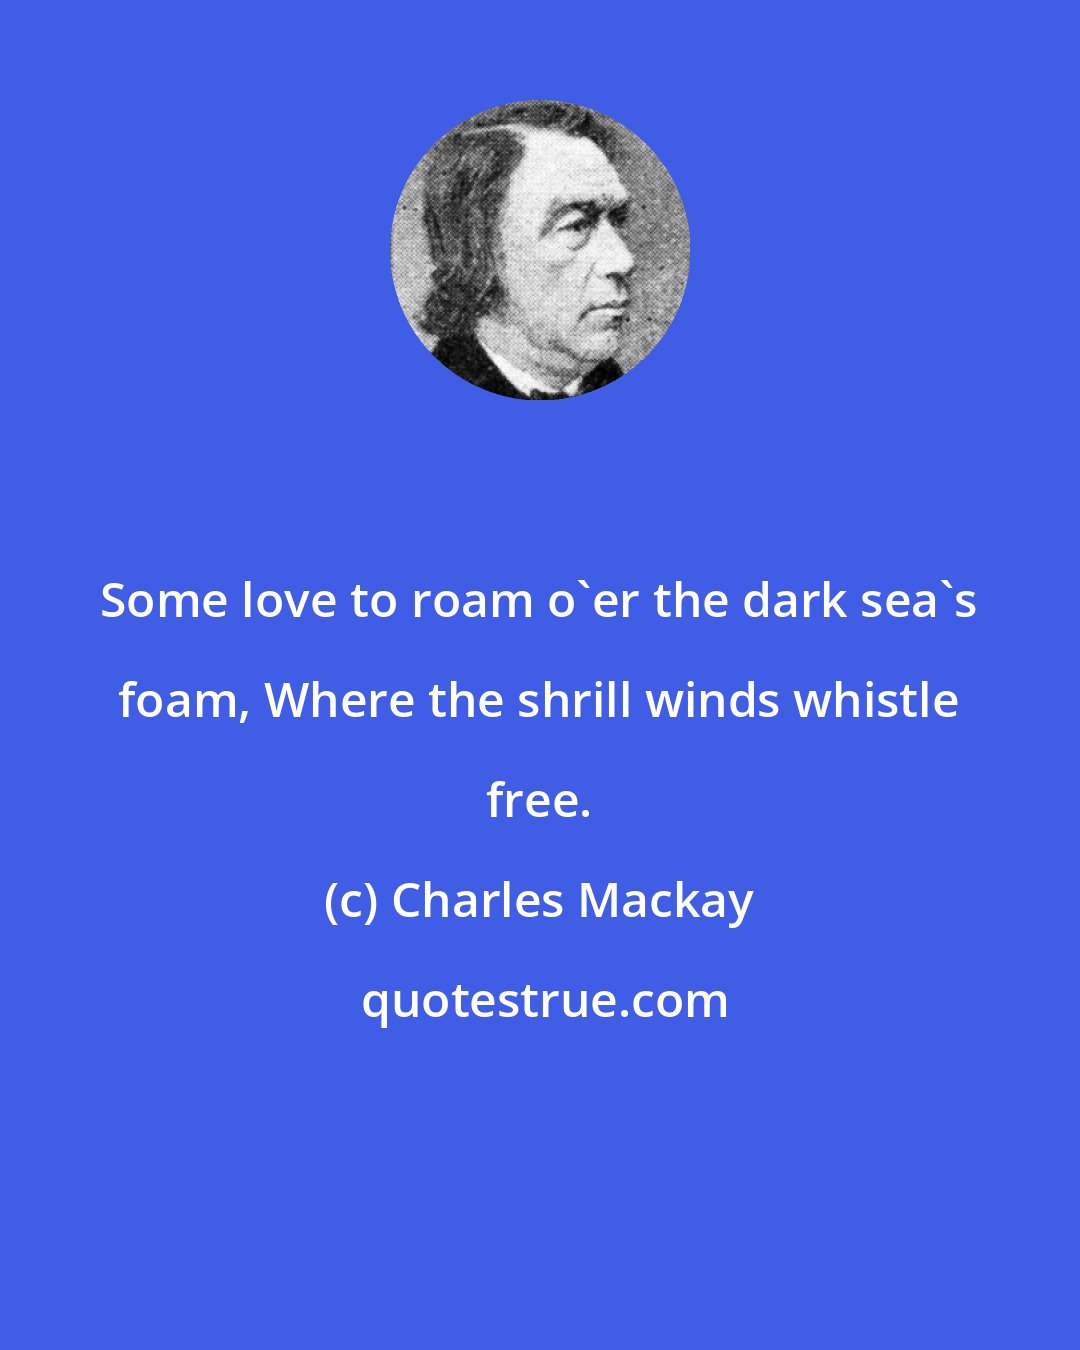 Charles Mackay: Some love to roam o'er the dark sea's foam, Where the shrill winds whistle free.